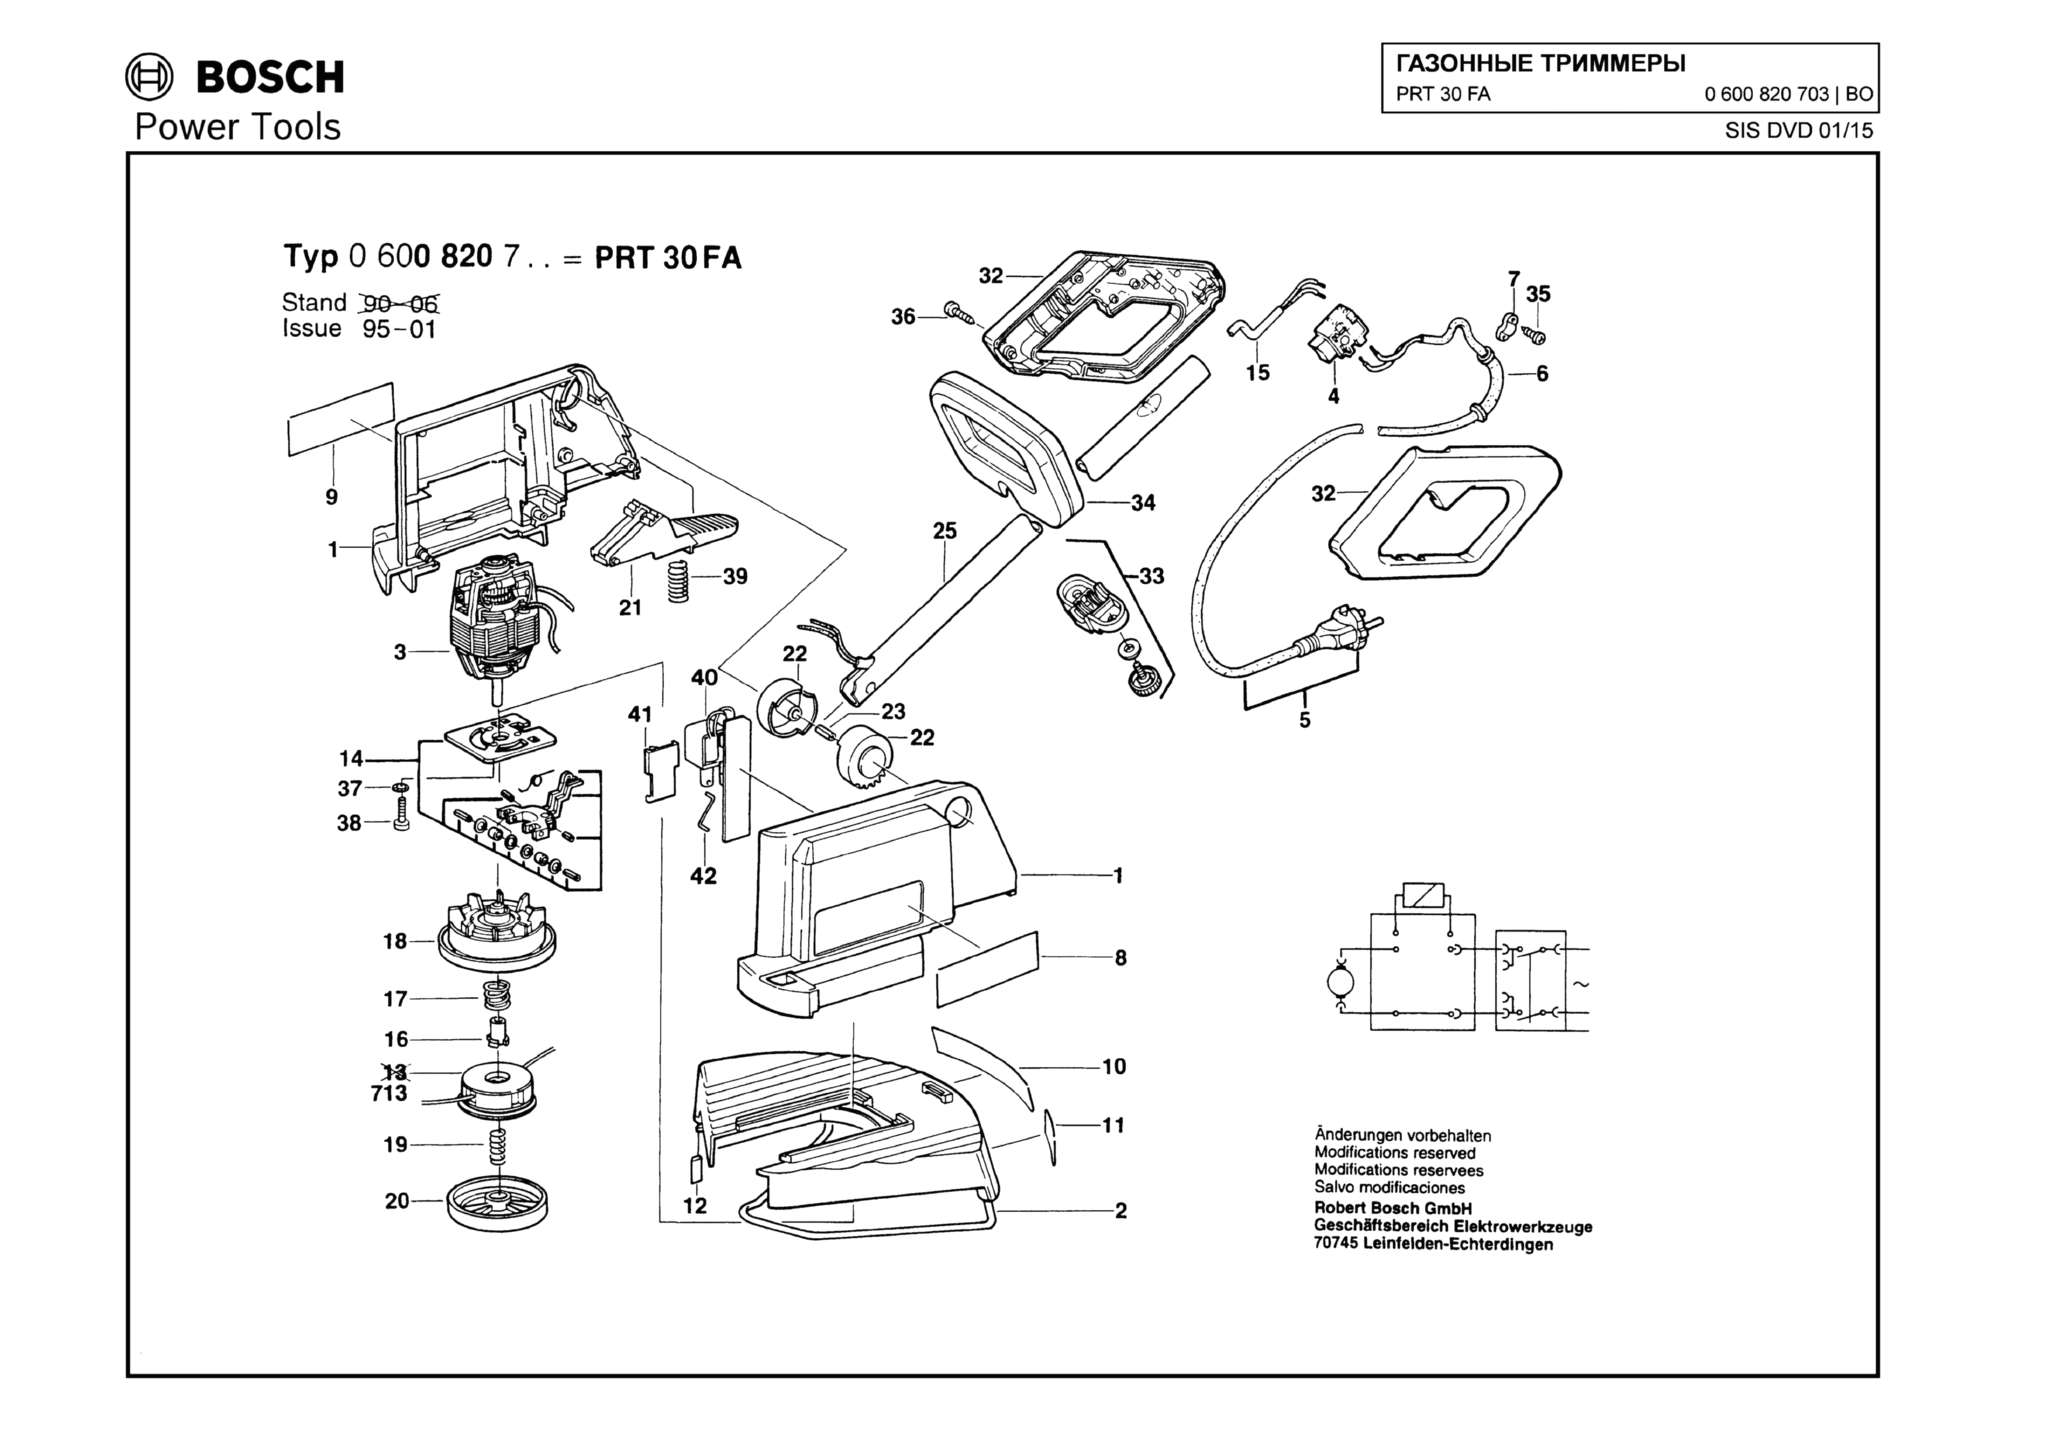 Запчасти, схема и деталировка Bosch PRT 30 FA (ТИП 0600820703)